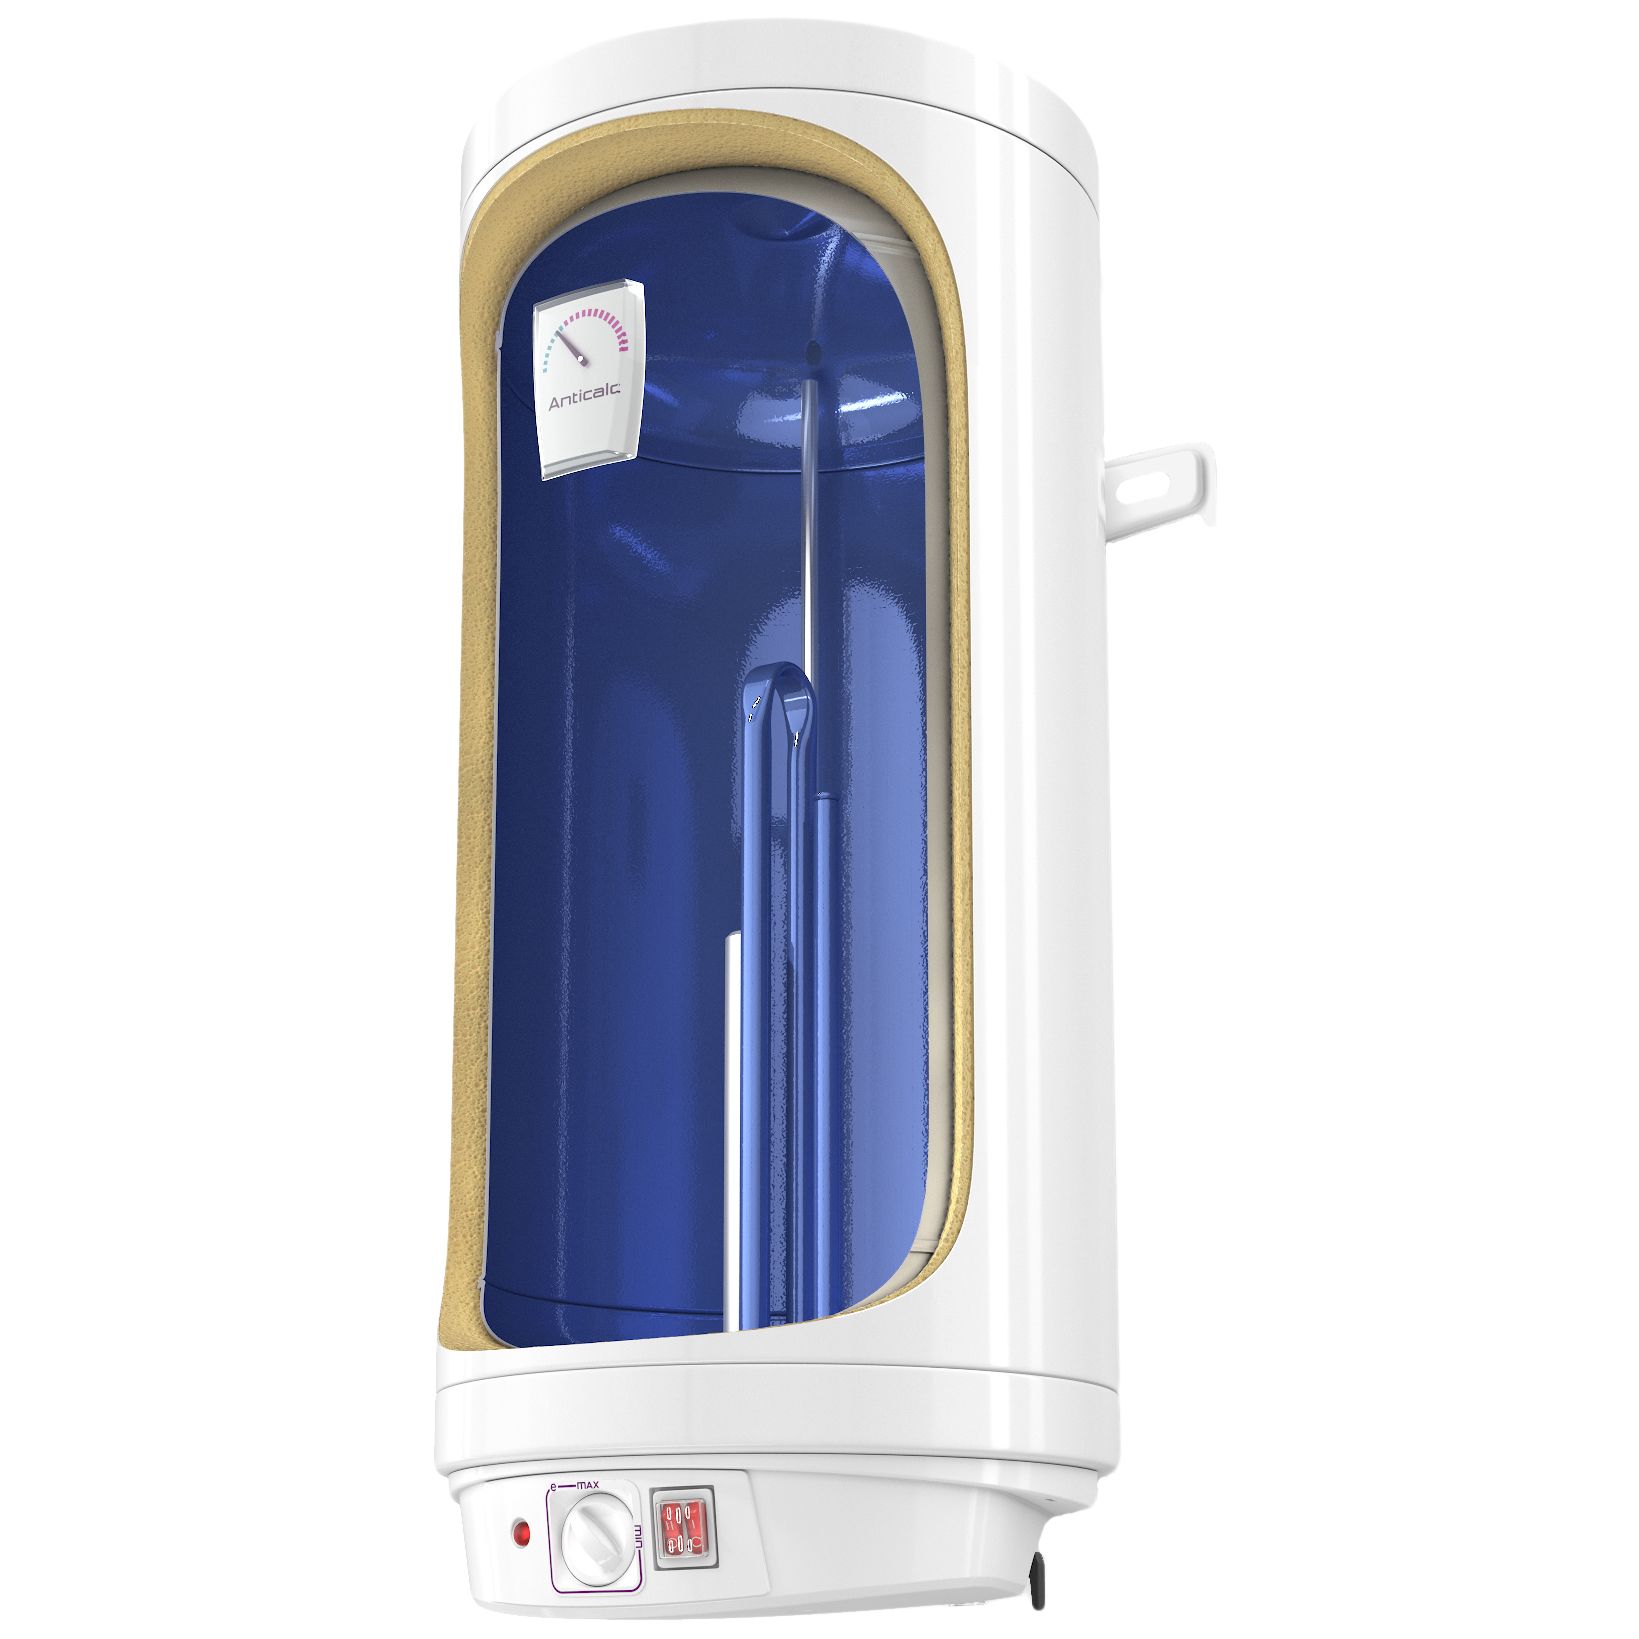 anywhere aluminum magnet eMAG.ro – 5 modele de boilere pentru baie si bucatarie, cu consum redus de  energie